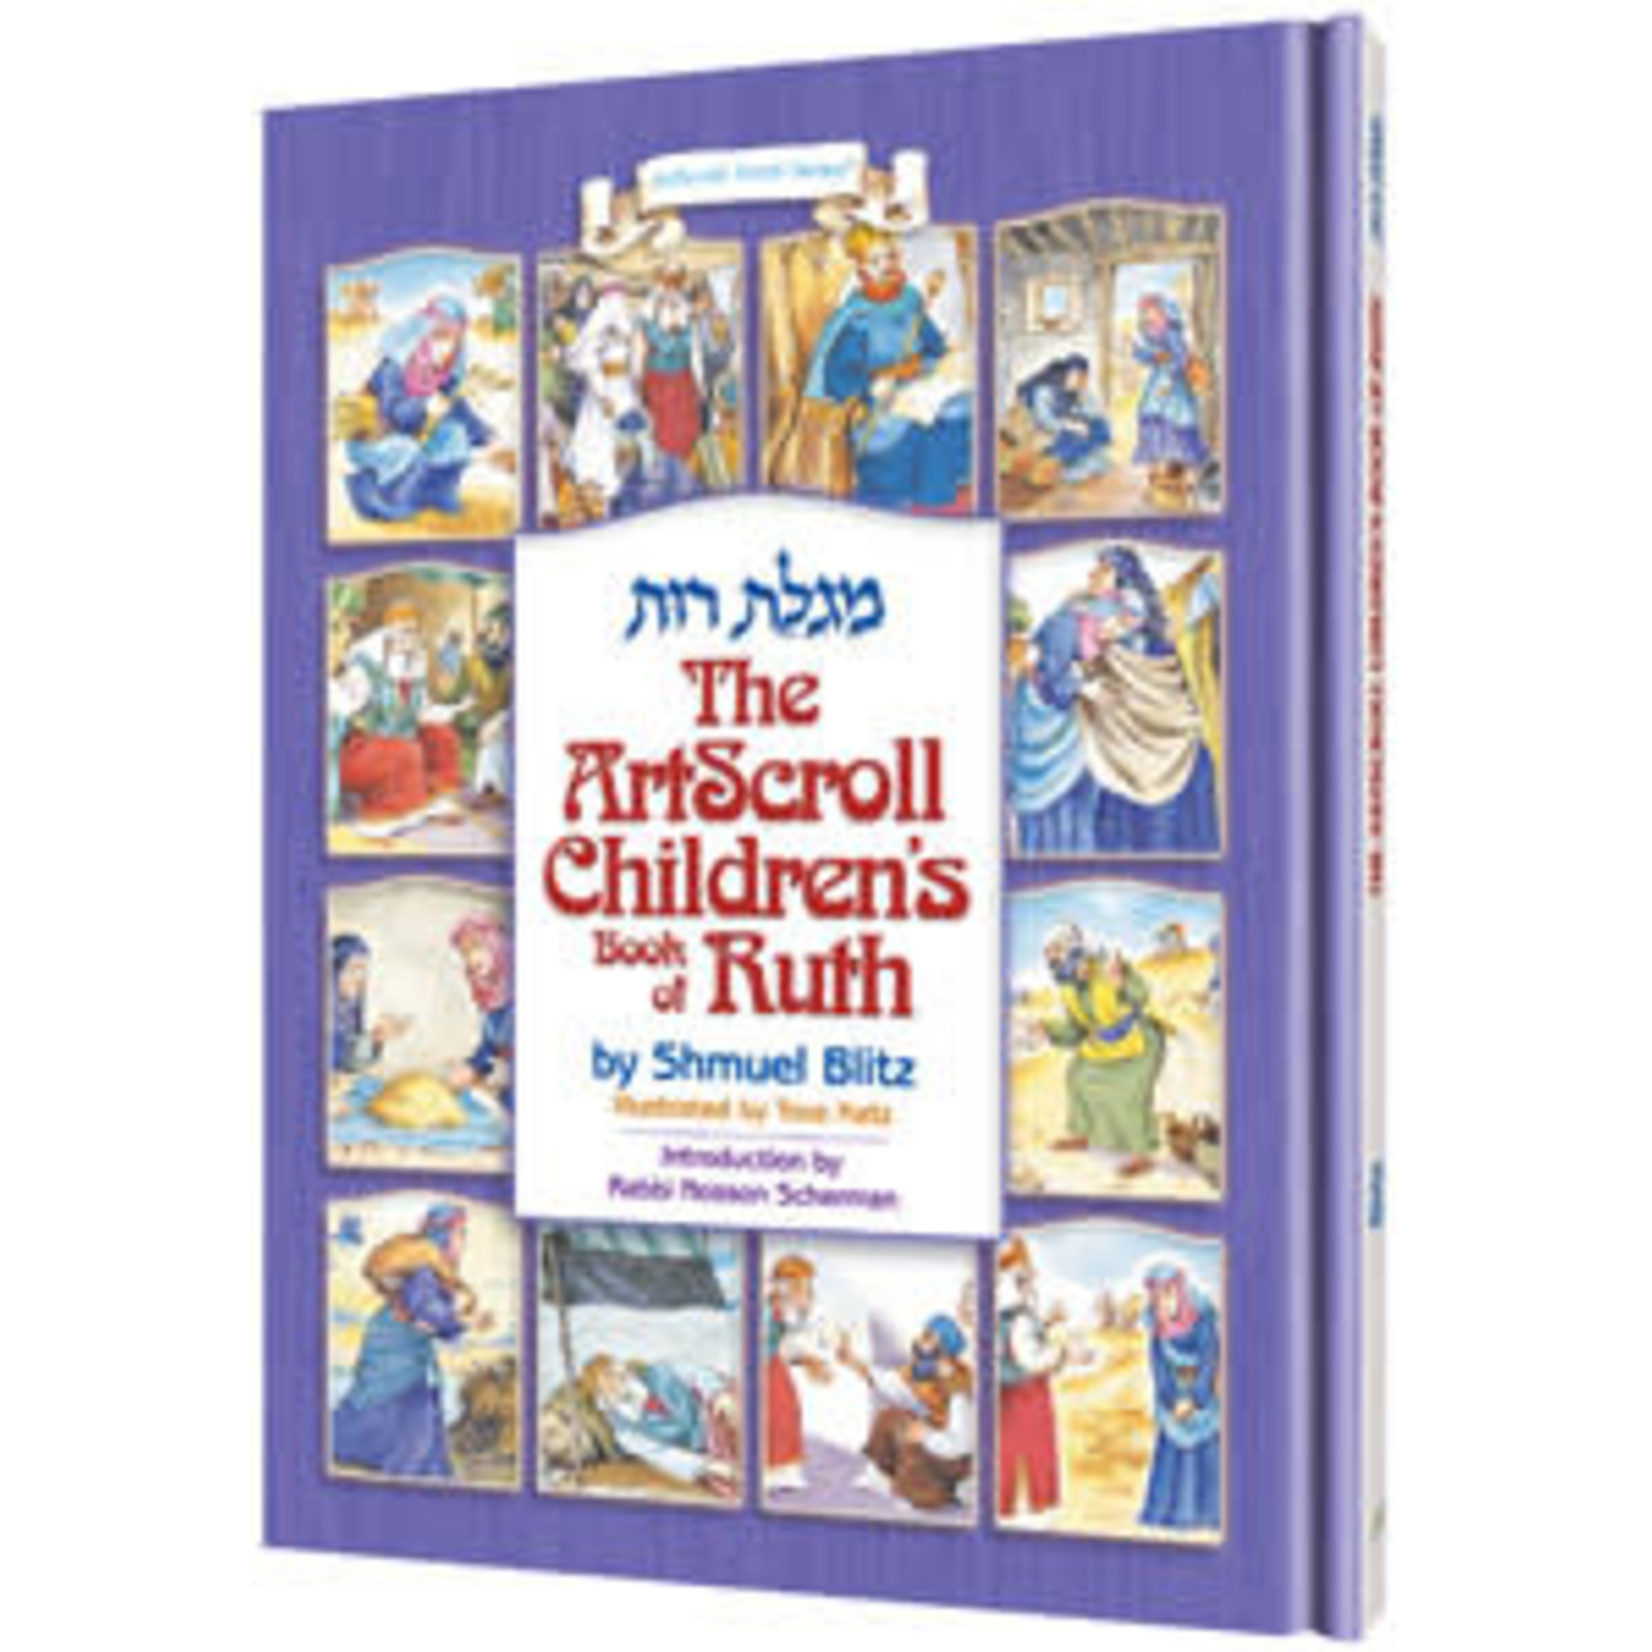 The ArtScroll Children's Book of Ruth